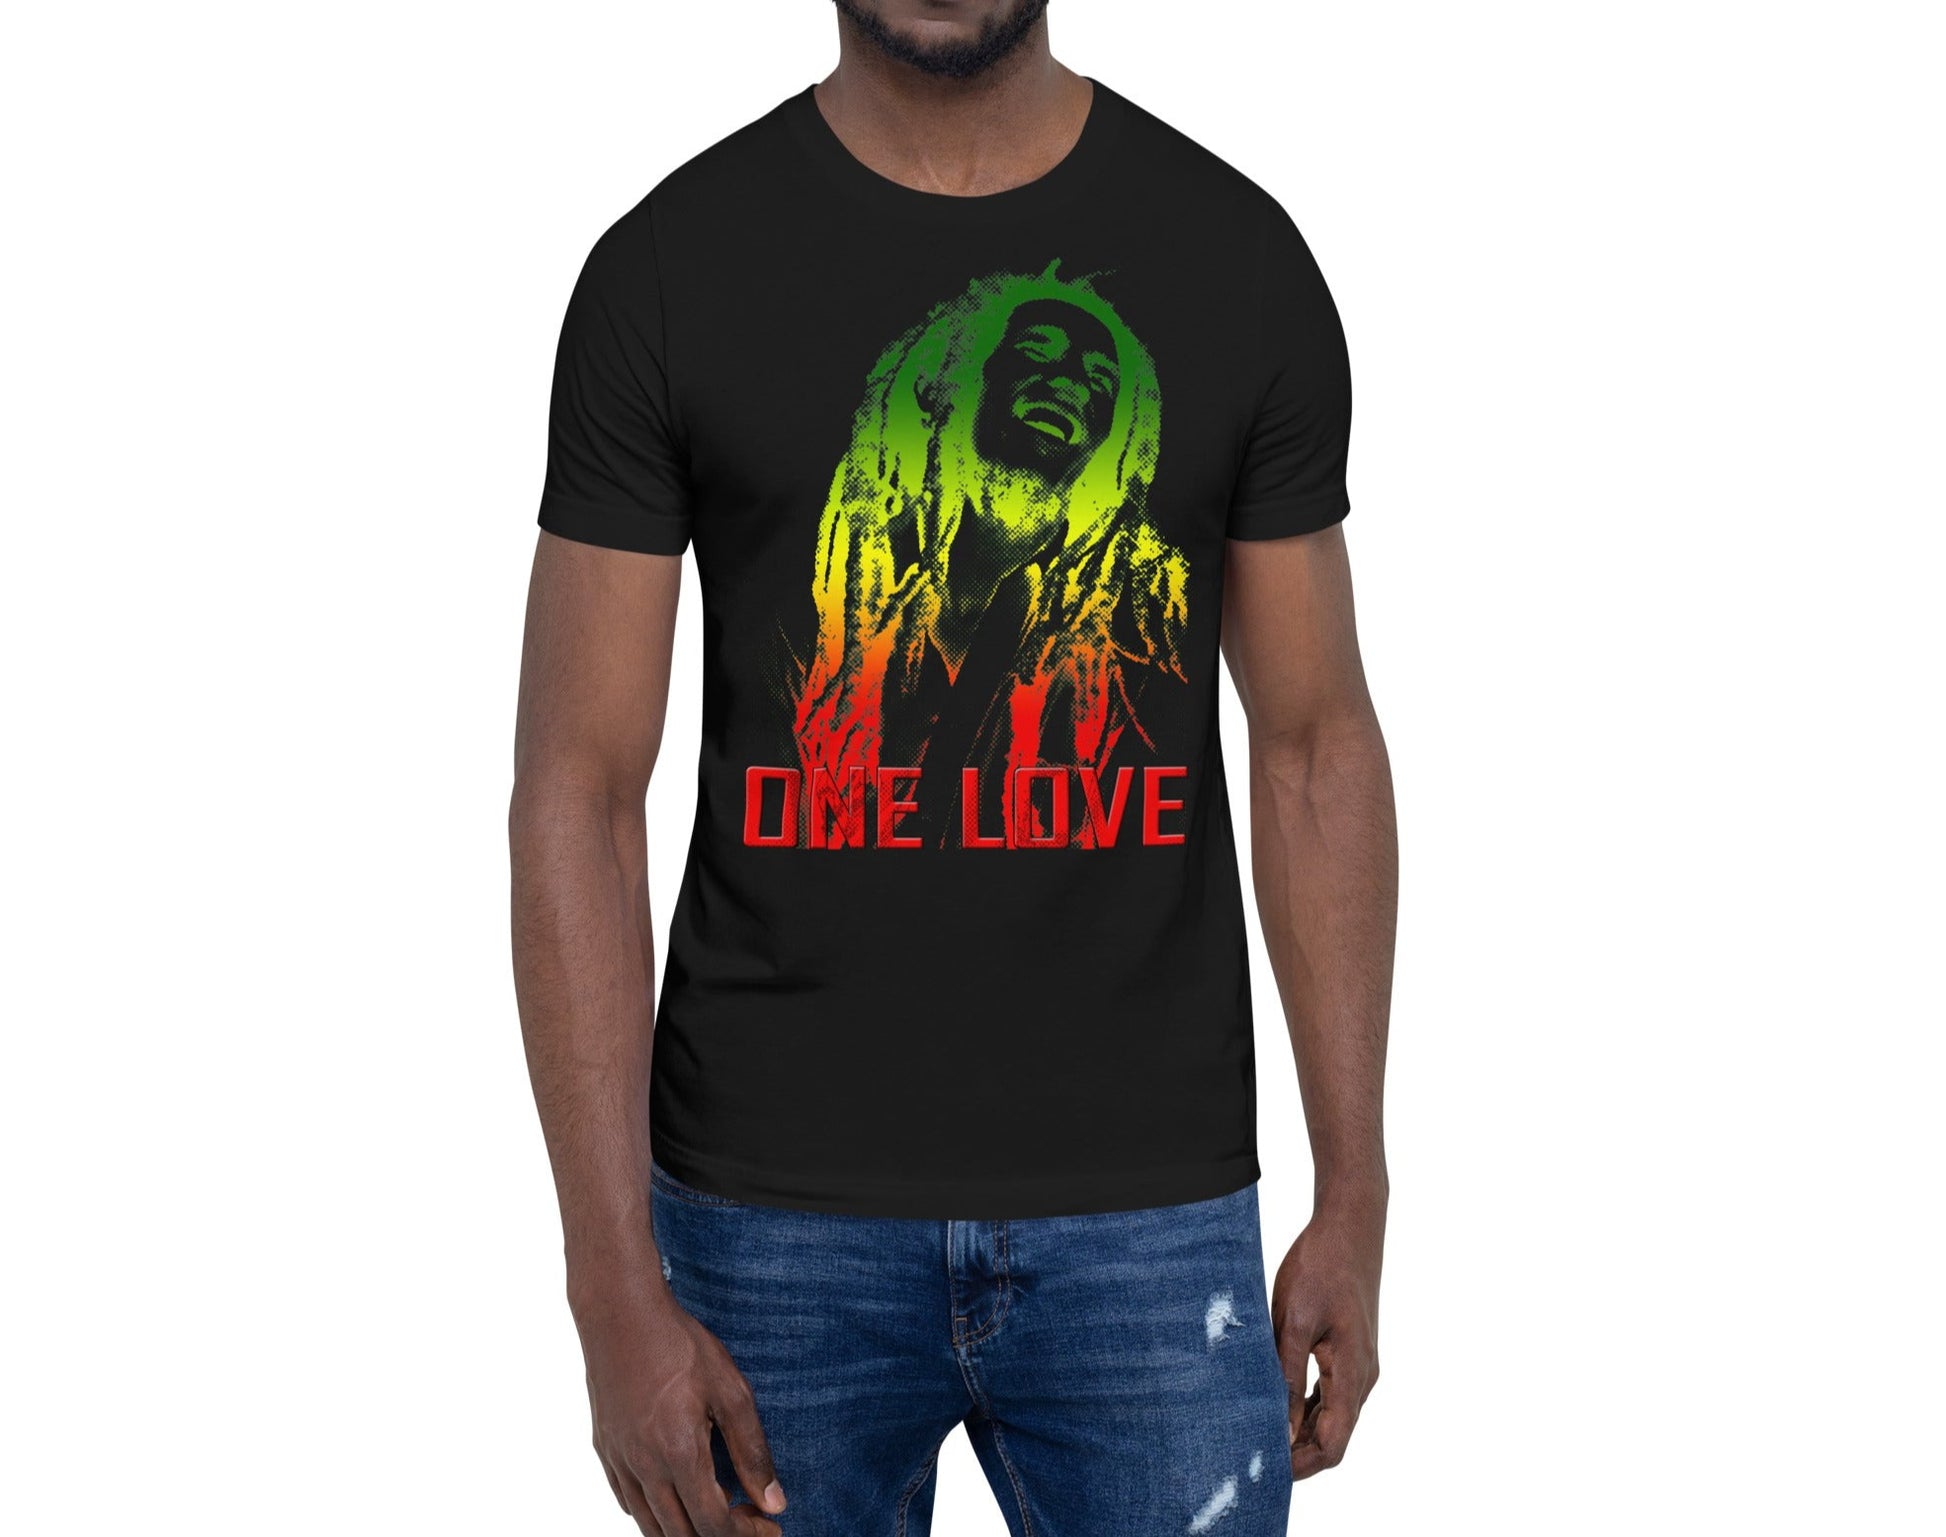 Embrace Unity with Bob Marley